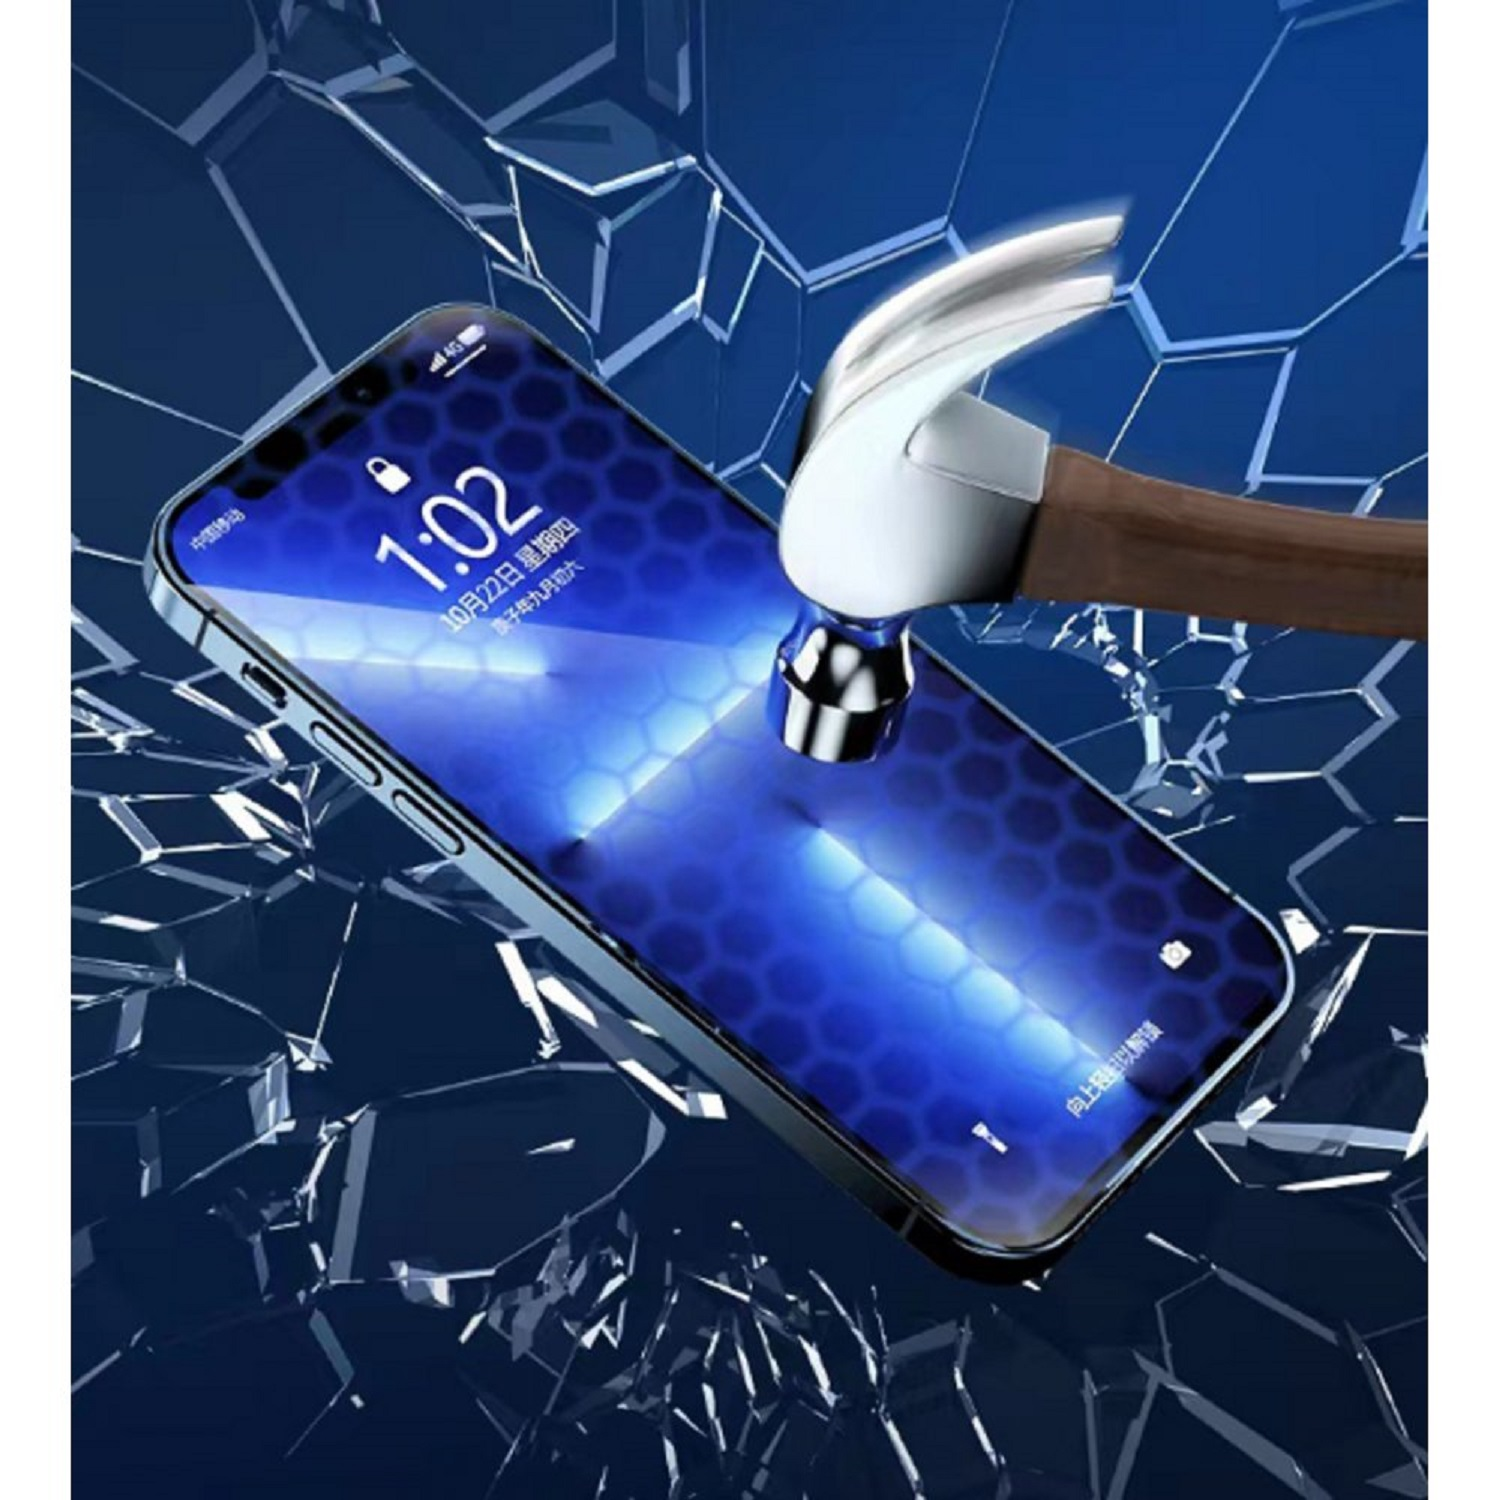 PROTECTORKING 2x 15 Apple Displayschutzfolie(für Panzerhartglas Pro PRIVACY Max) iPhone ANTI-SPY 9H